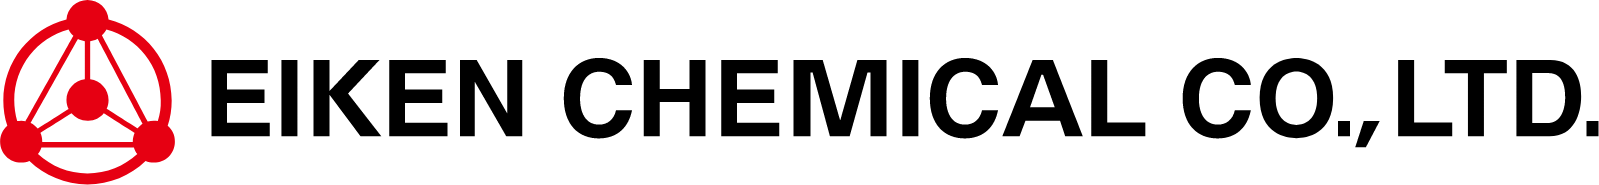 Eiken Chemical logo large (transparent PNG)